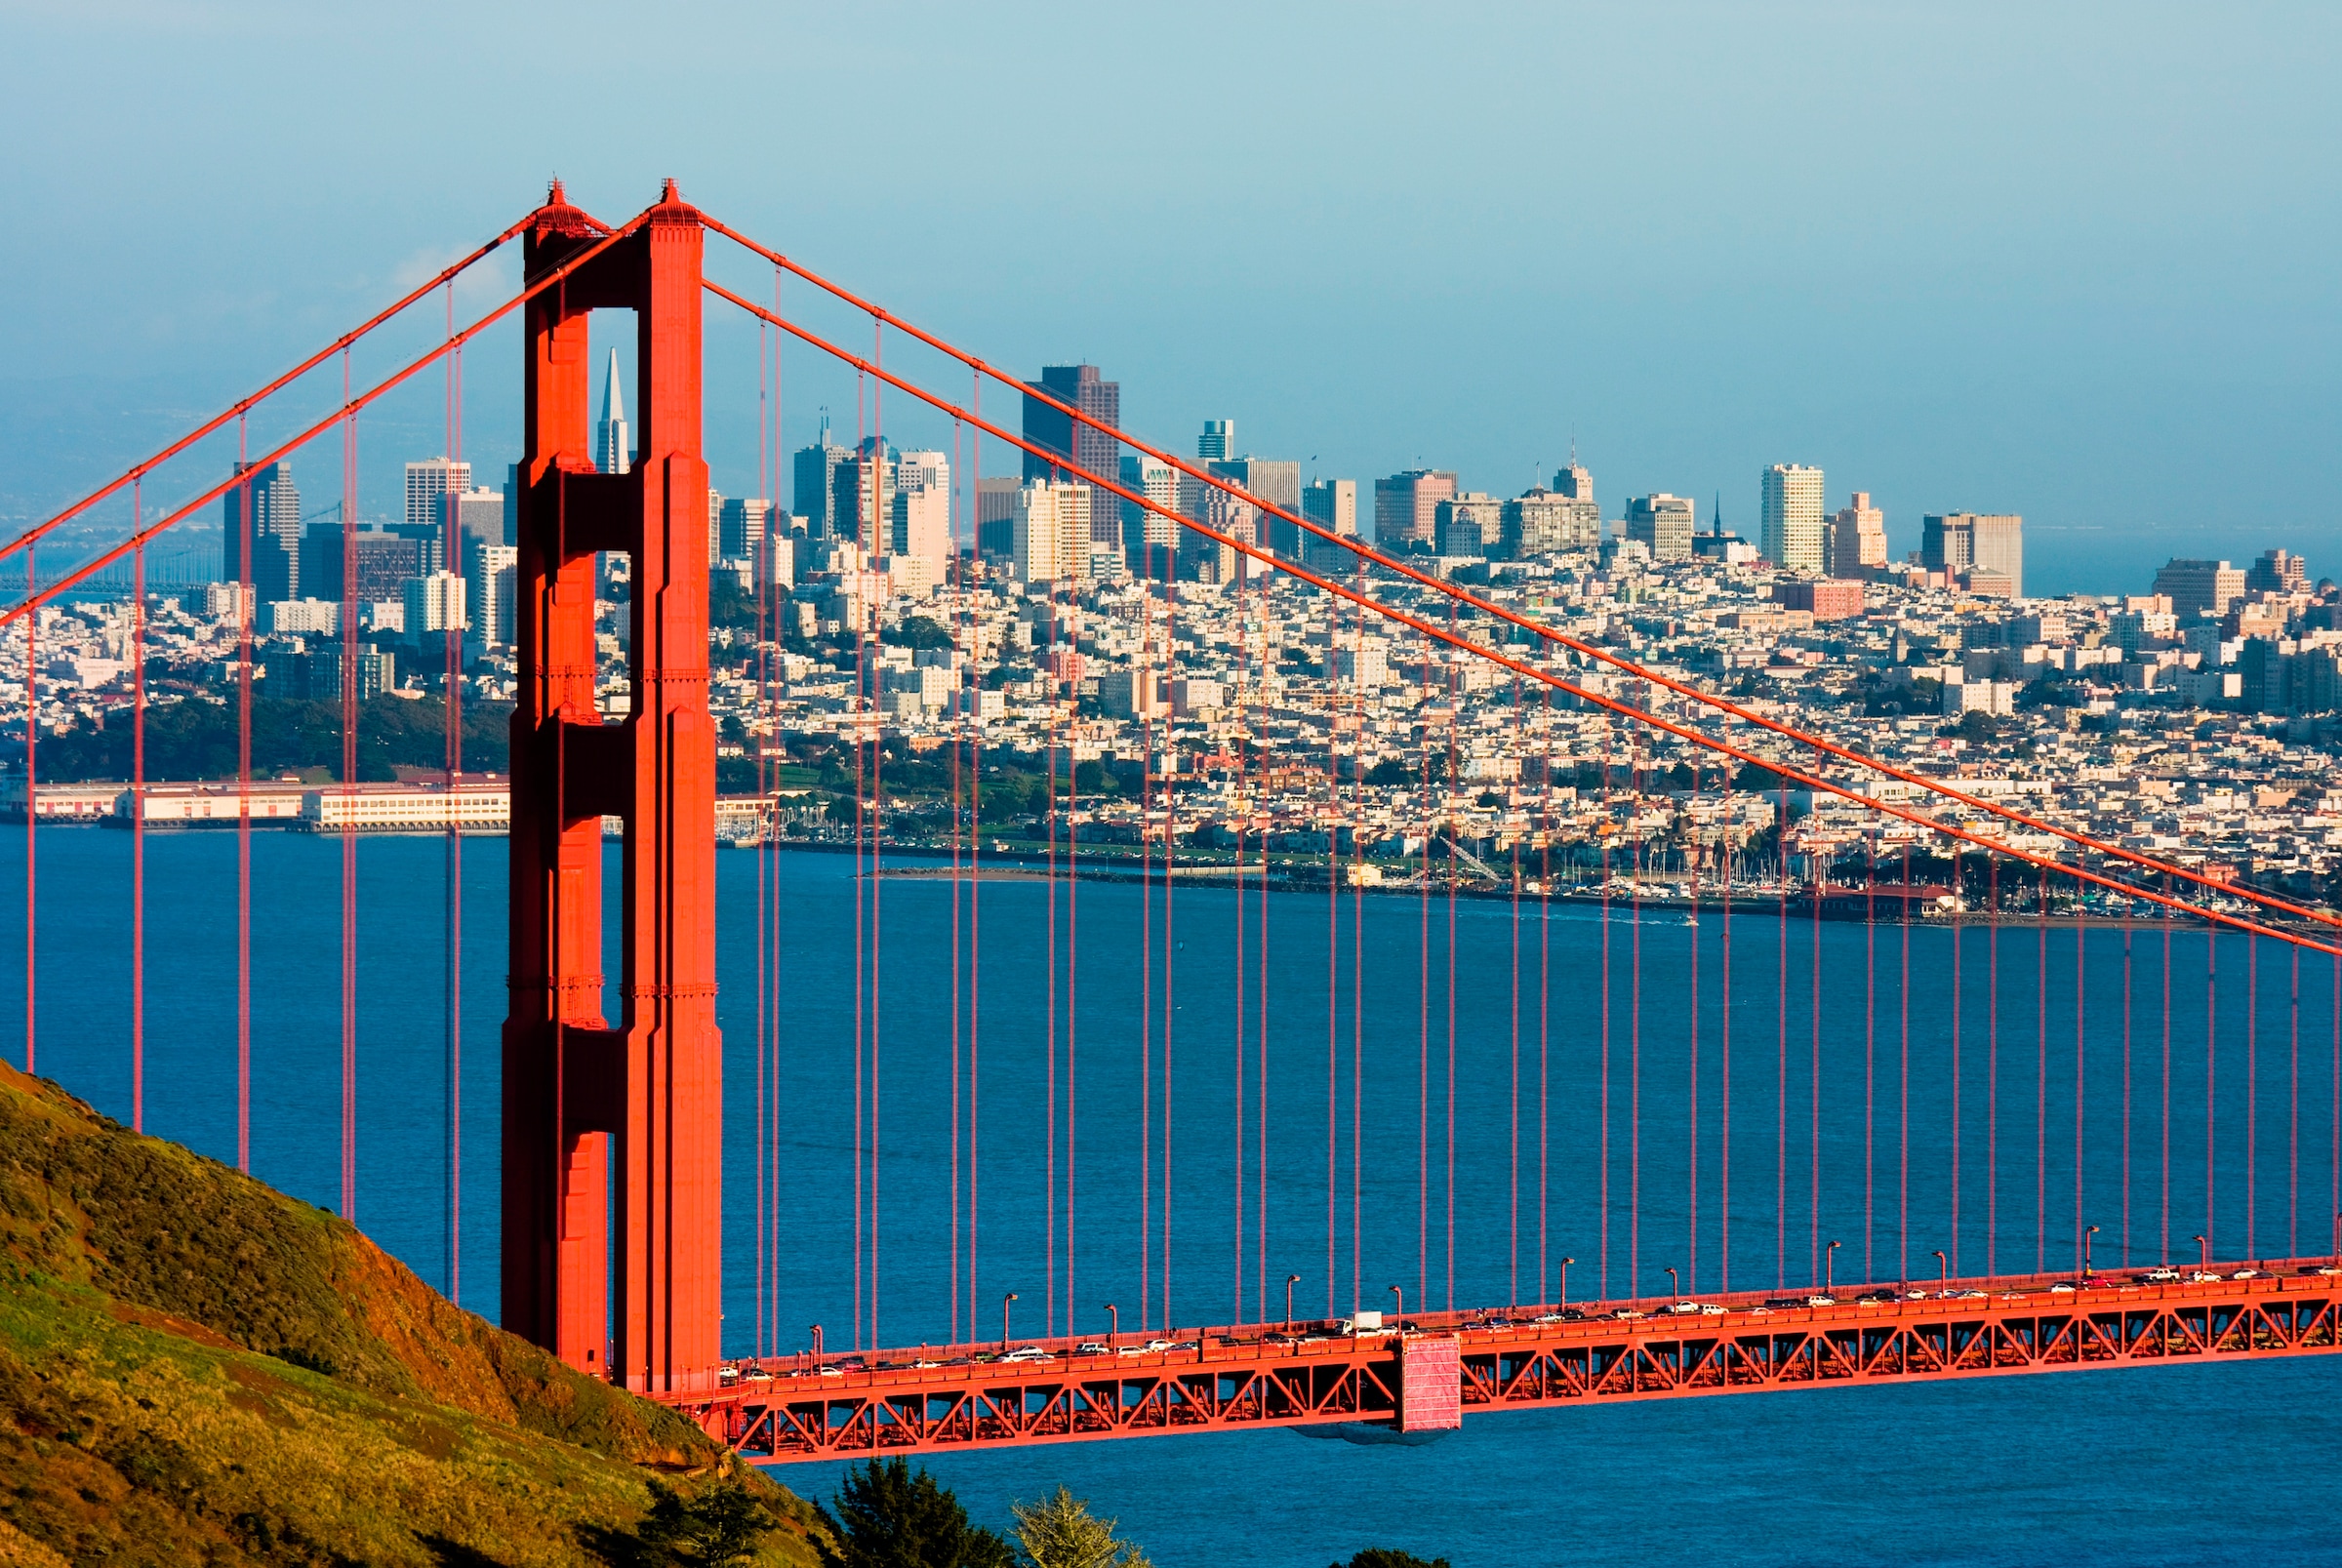 Papermoon Fototapete "Golden Gate Bridge"